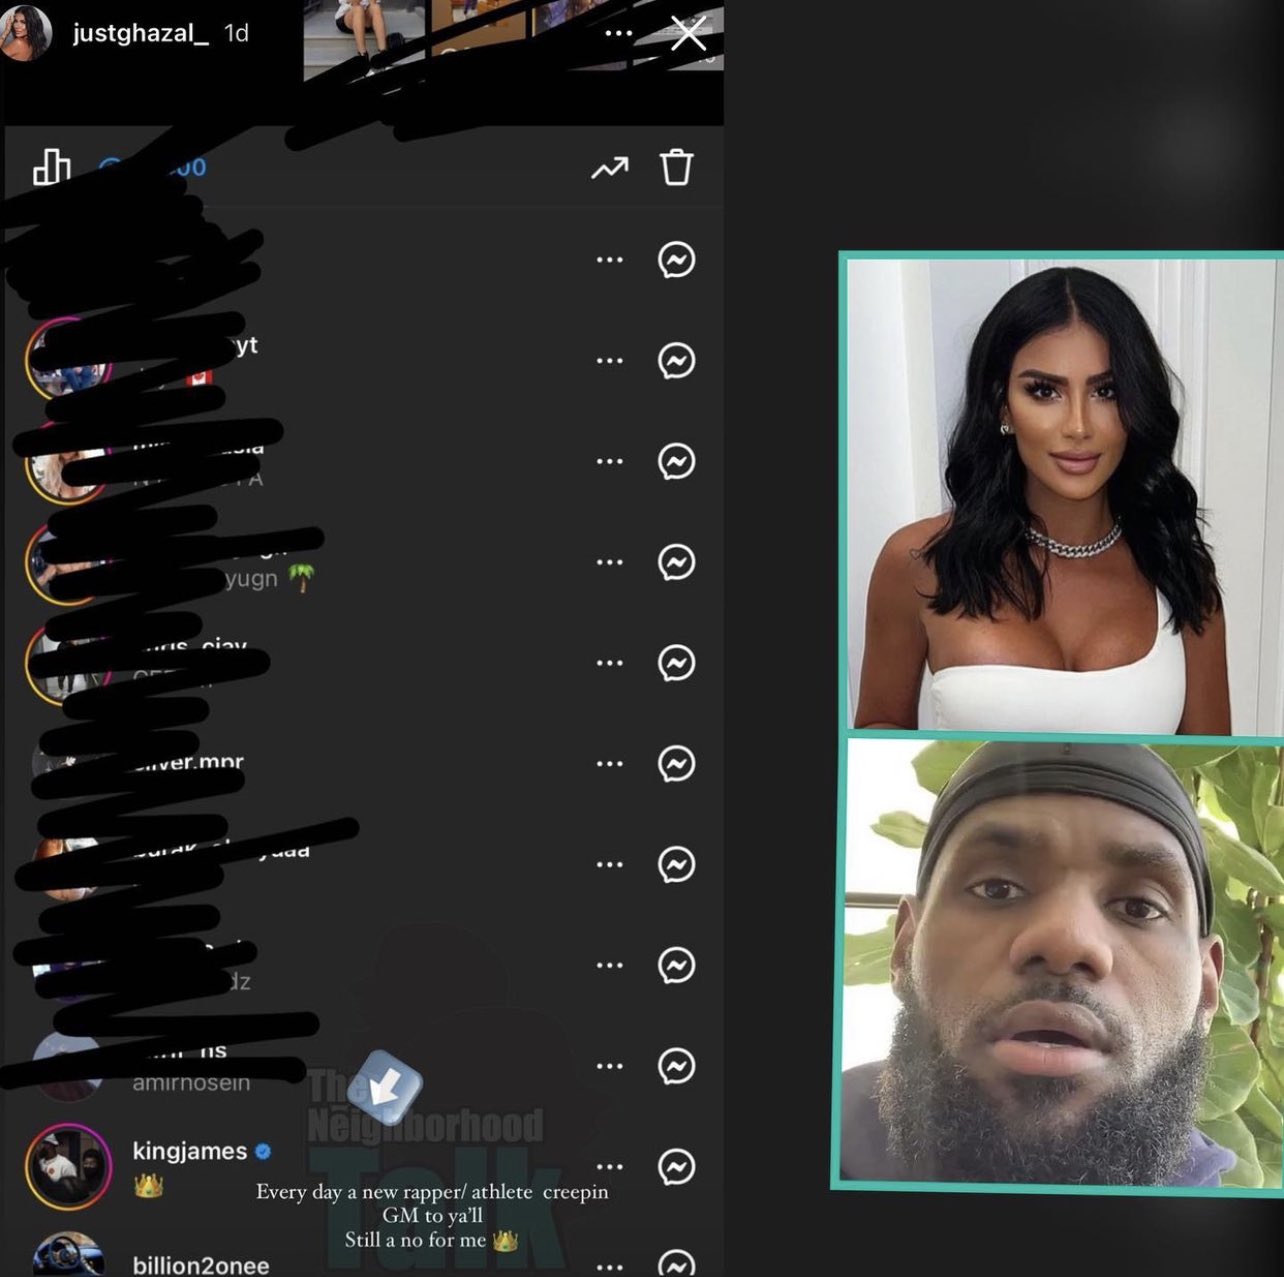 Instagram model accuses LeBron James